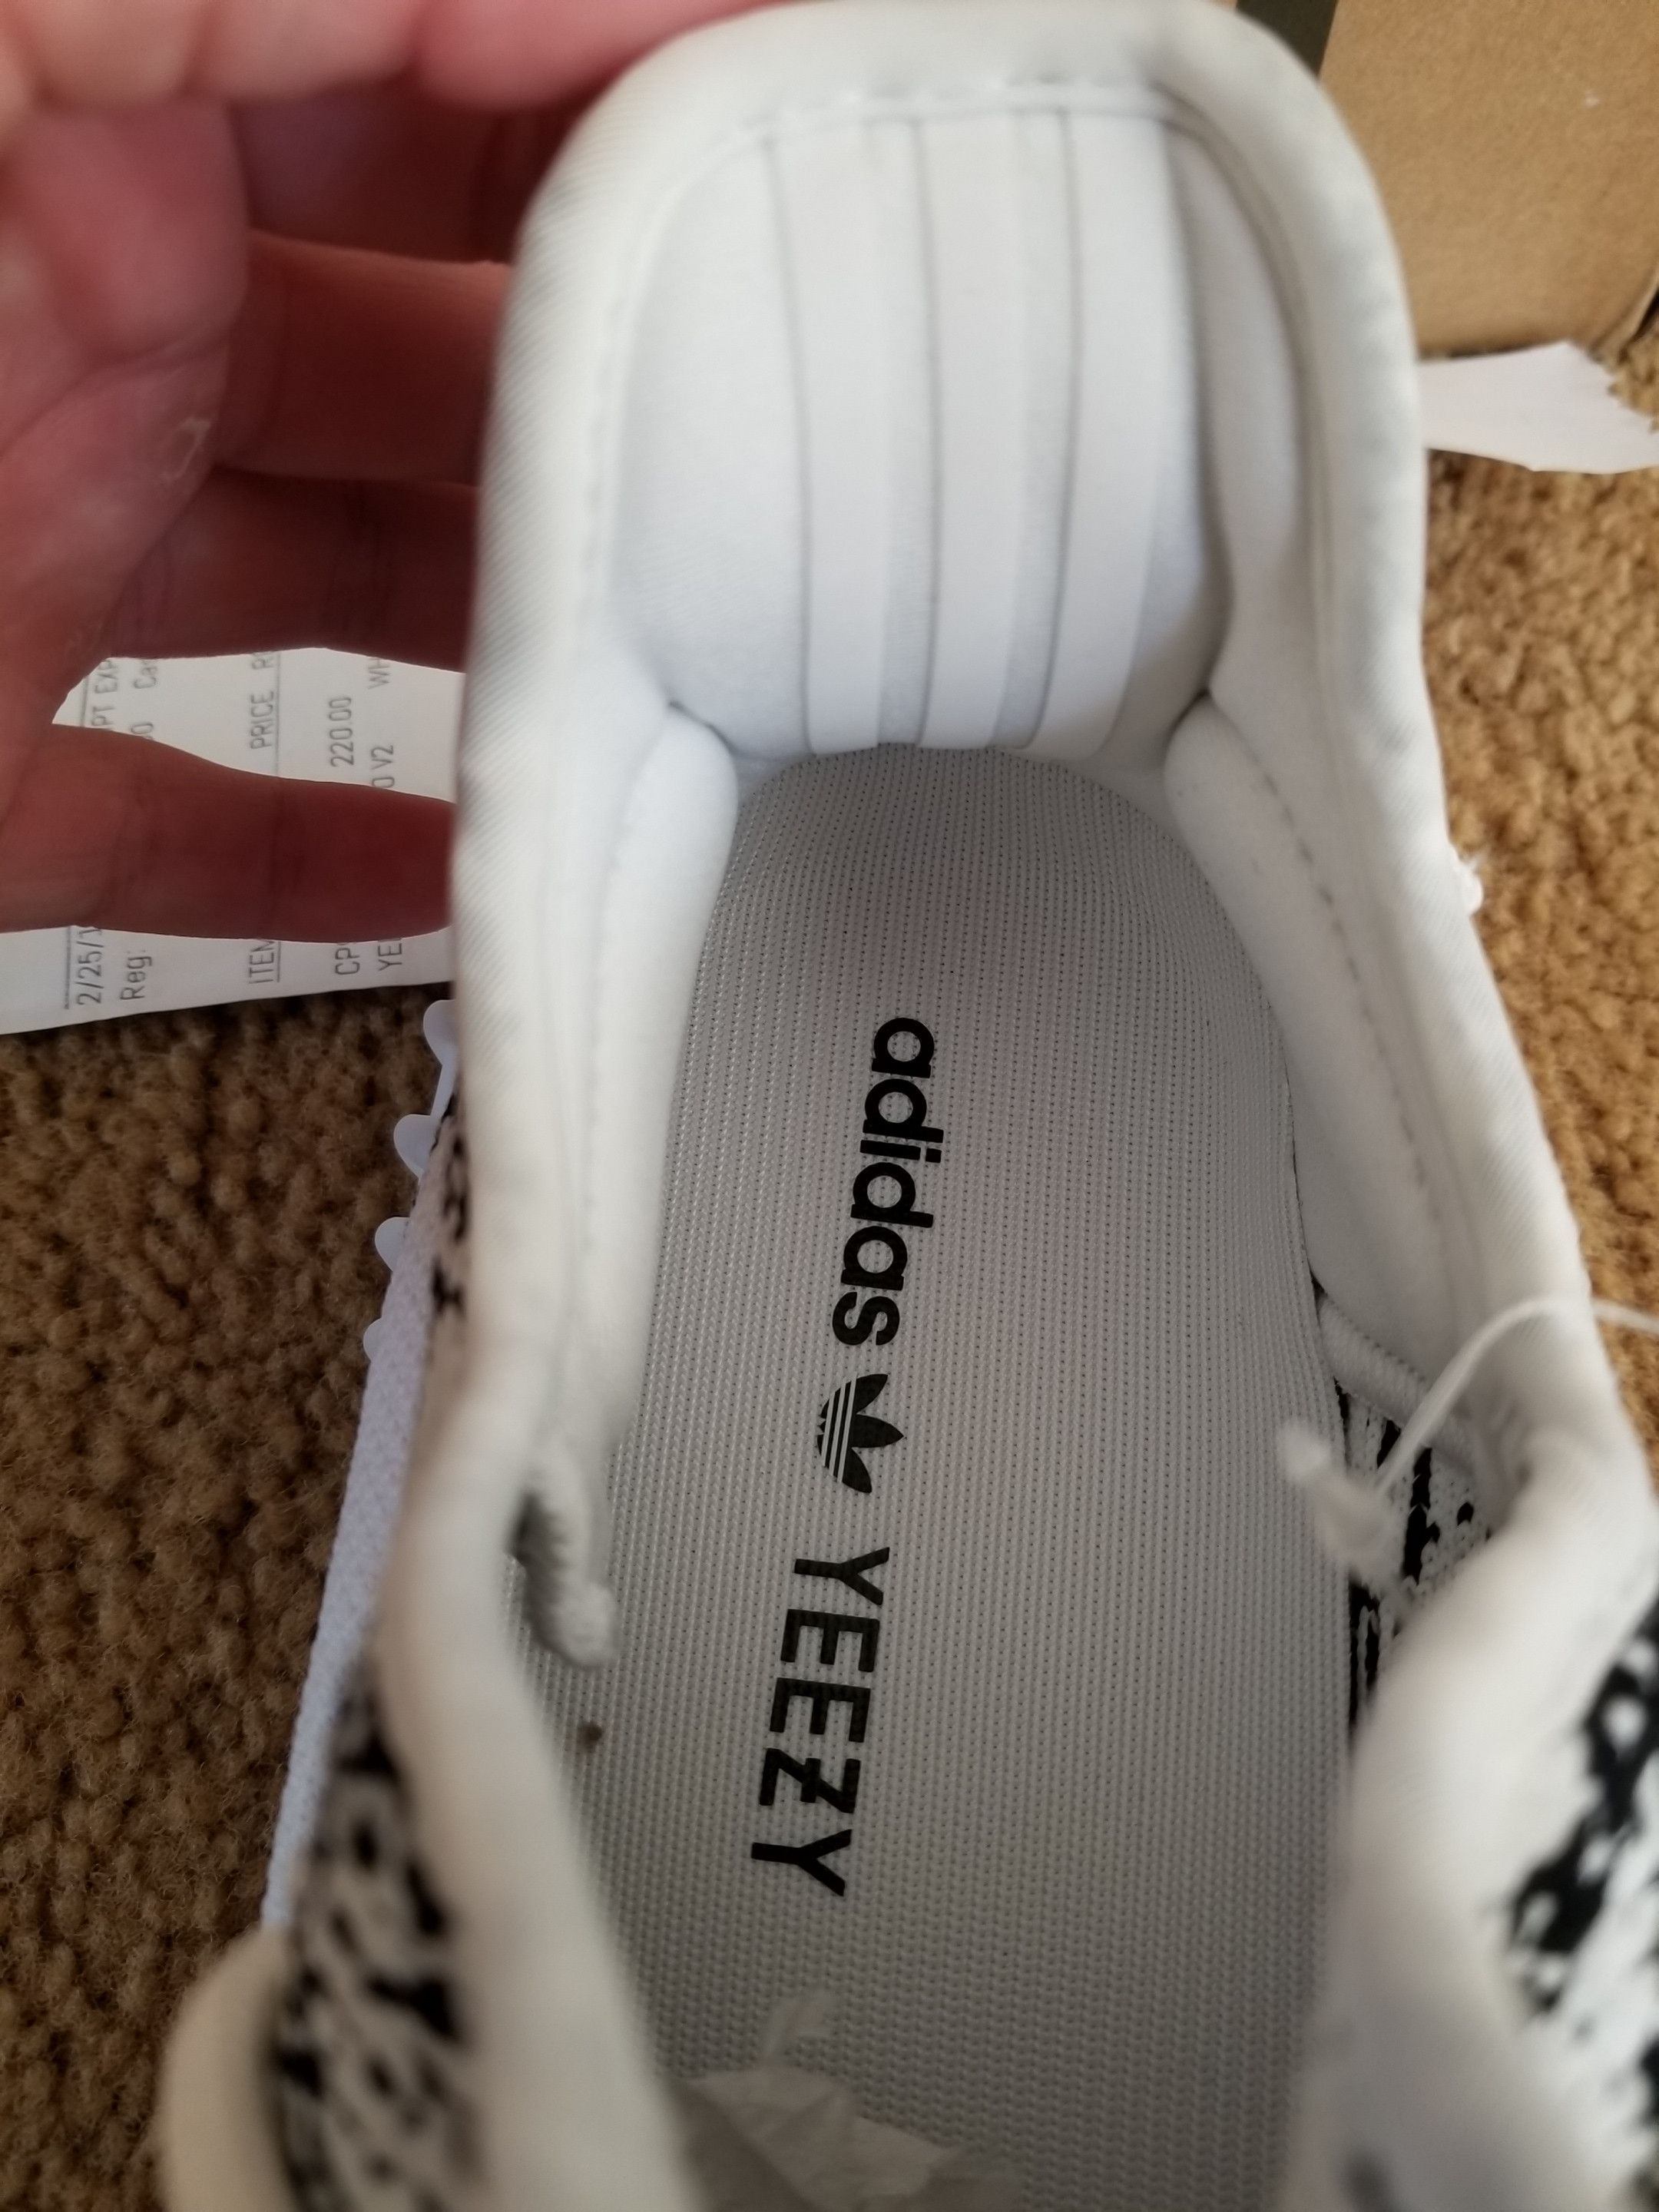 Adidas Yeezy Boost 350 V2 Zebra W/Receipt Size US 10 / EU 43 - 7 Thumbnail